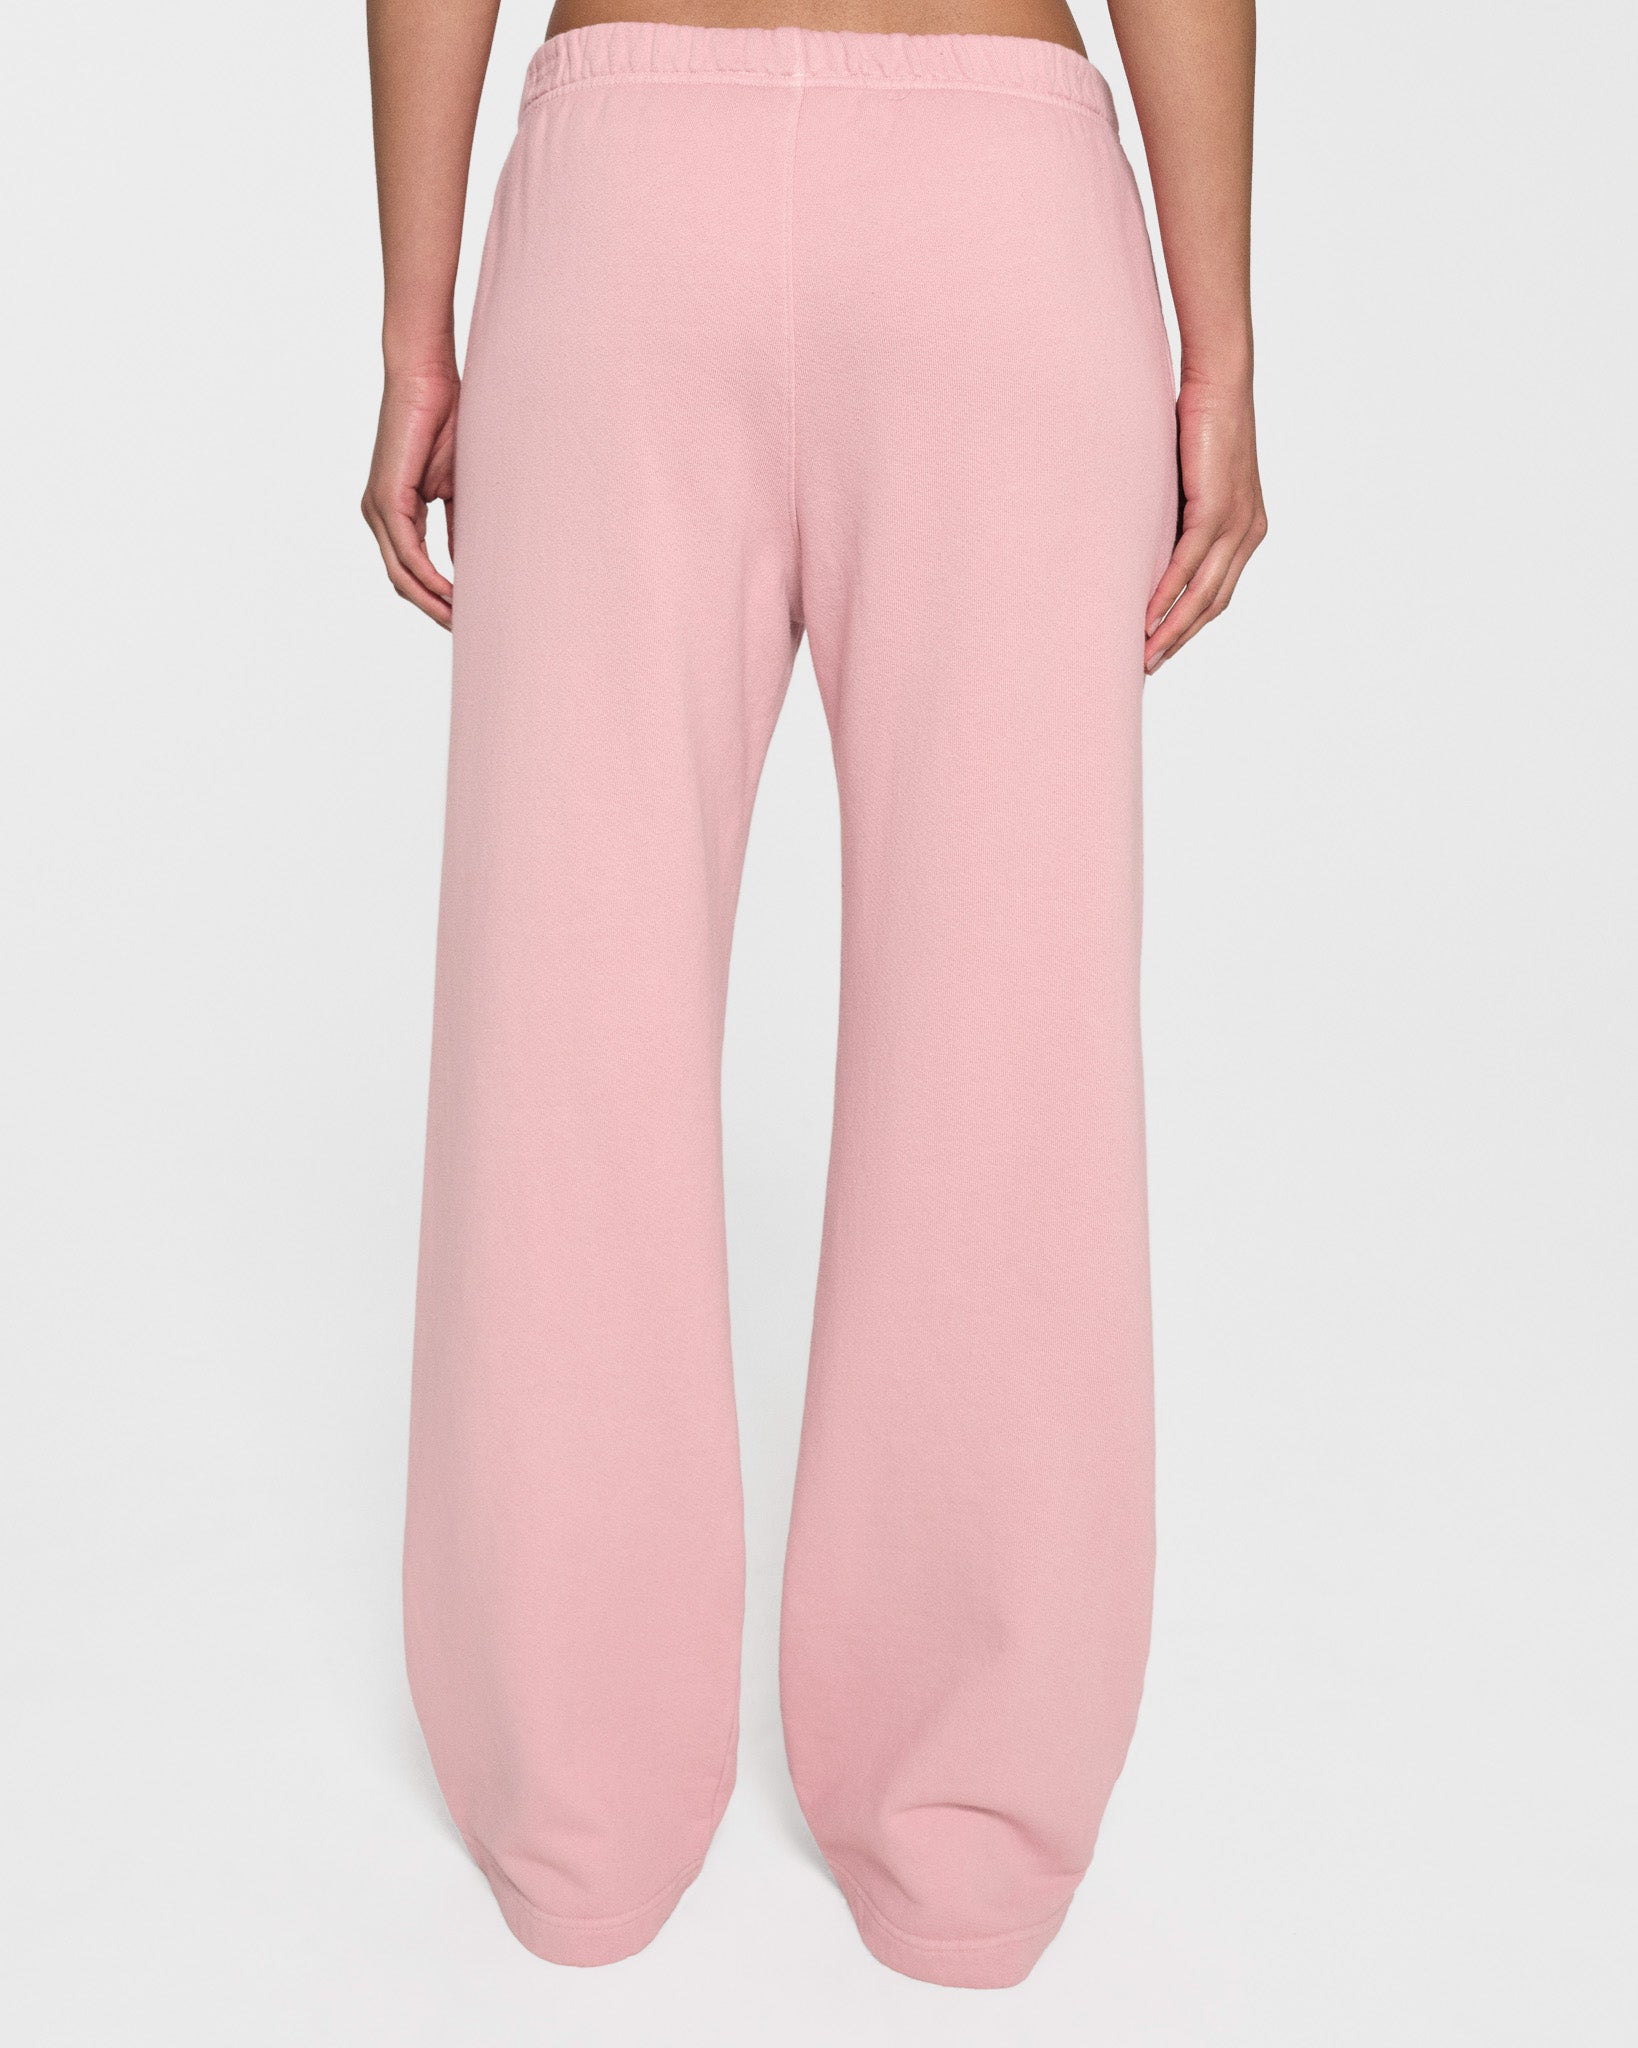 Women's Sweatpants (Pink)